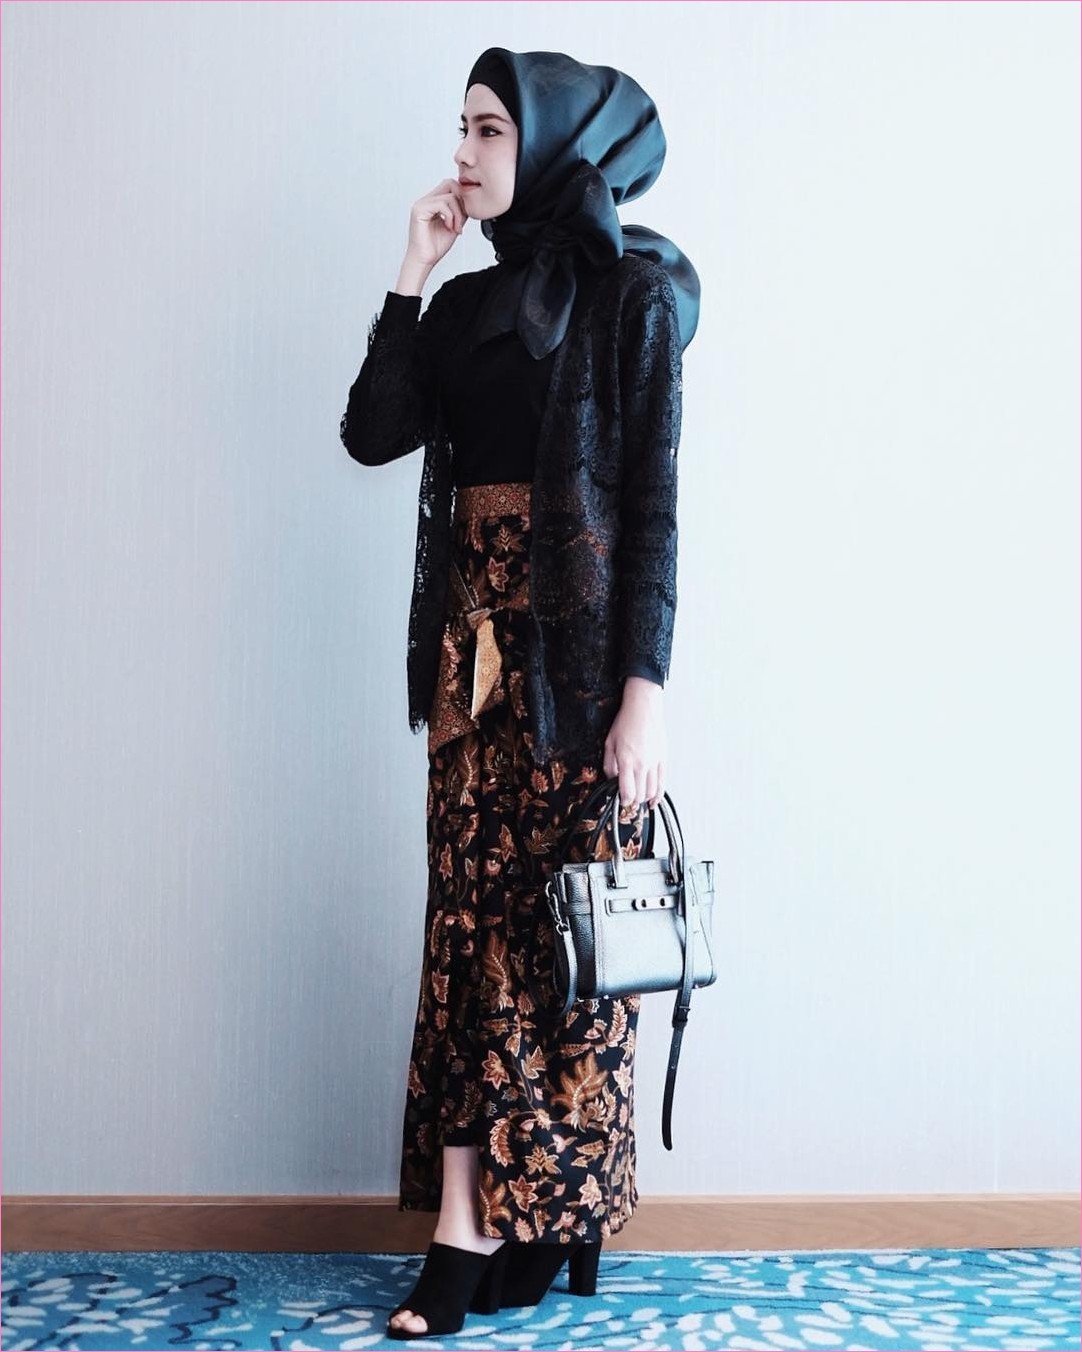  Desain model baju kondangan muslimah berhijab modern baik kebaya maupun dress yang dikena 22 Outfit Baju Kondangan Berhijab Ala Selebgram 2018